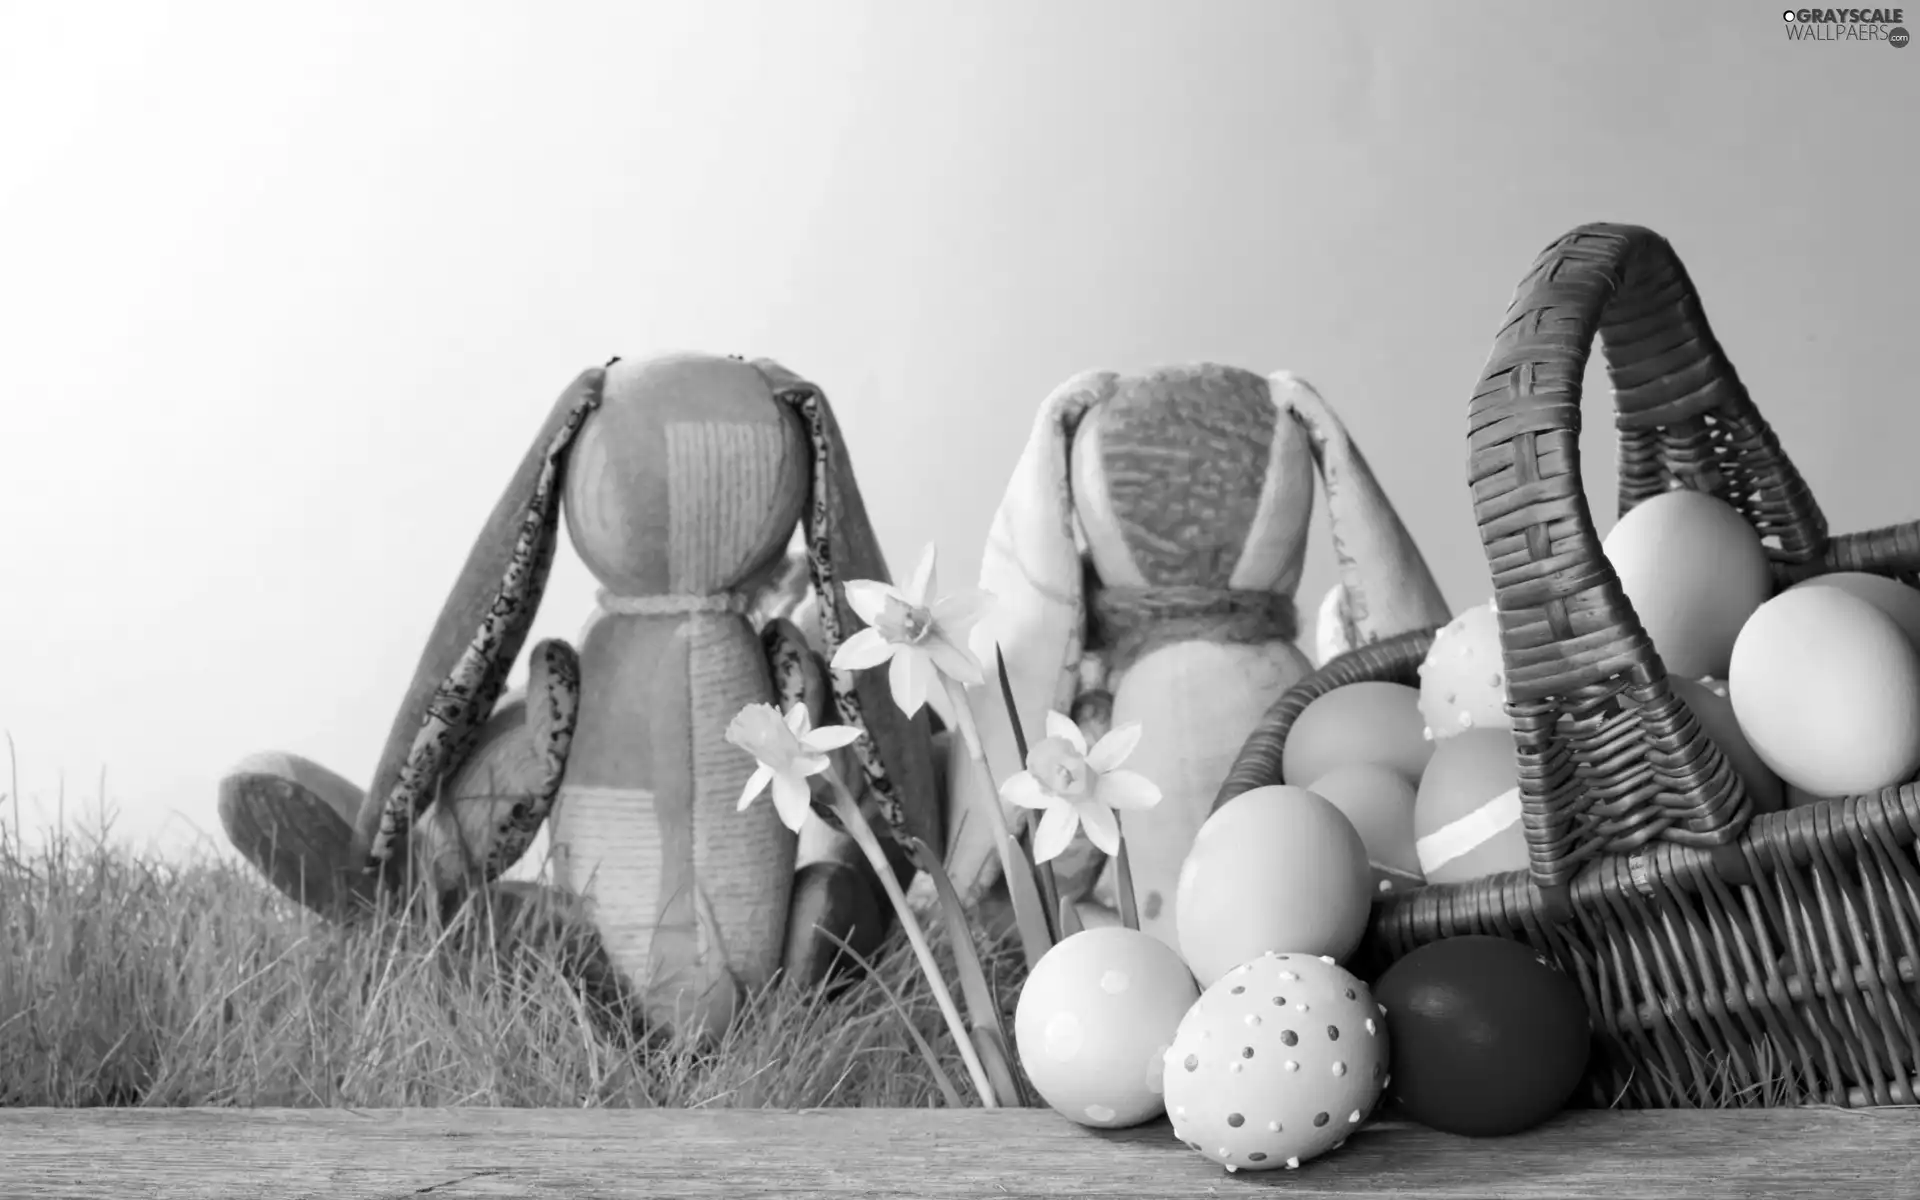 toys, Easter, eggs, Daffodils, basket, Rabbits